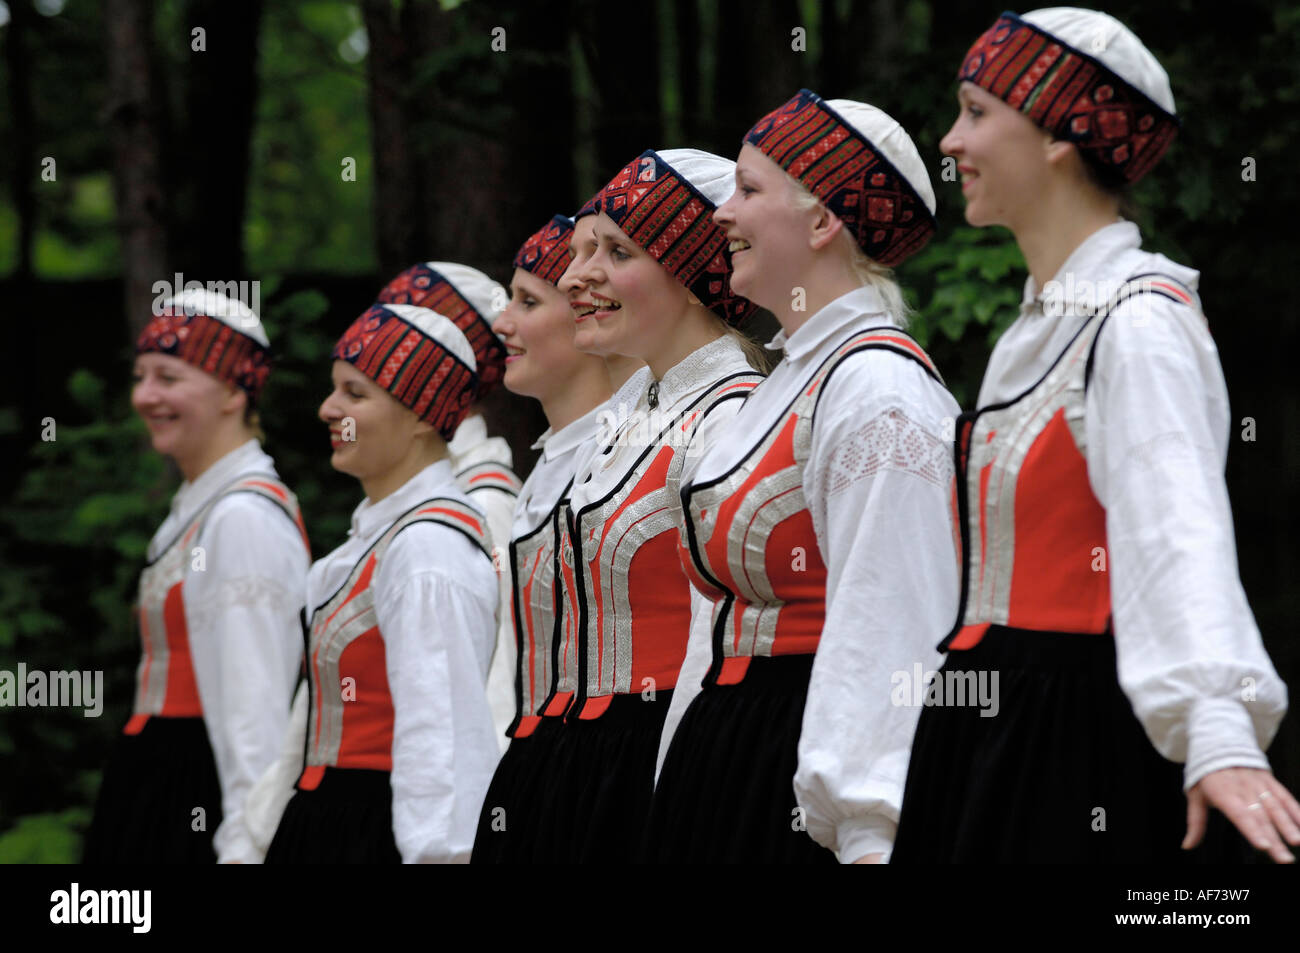 Traditional Latvian folk dancing, performed at the Lativan Open Air Ethnographic Museum (Latvijas etnografiskais brivdabas muzejs), near Riga, Latvia - SHALLOW DOF Stock Photo